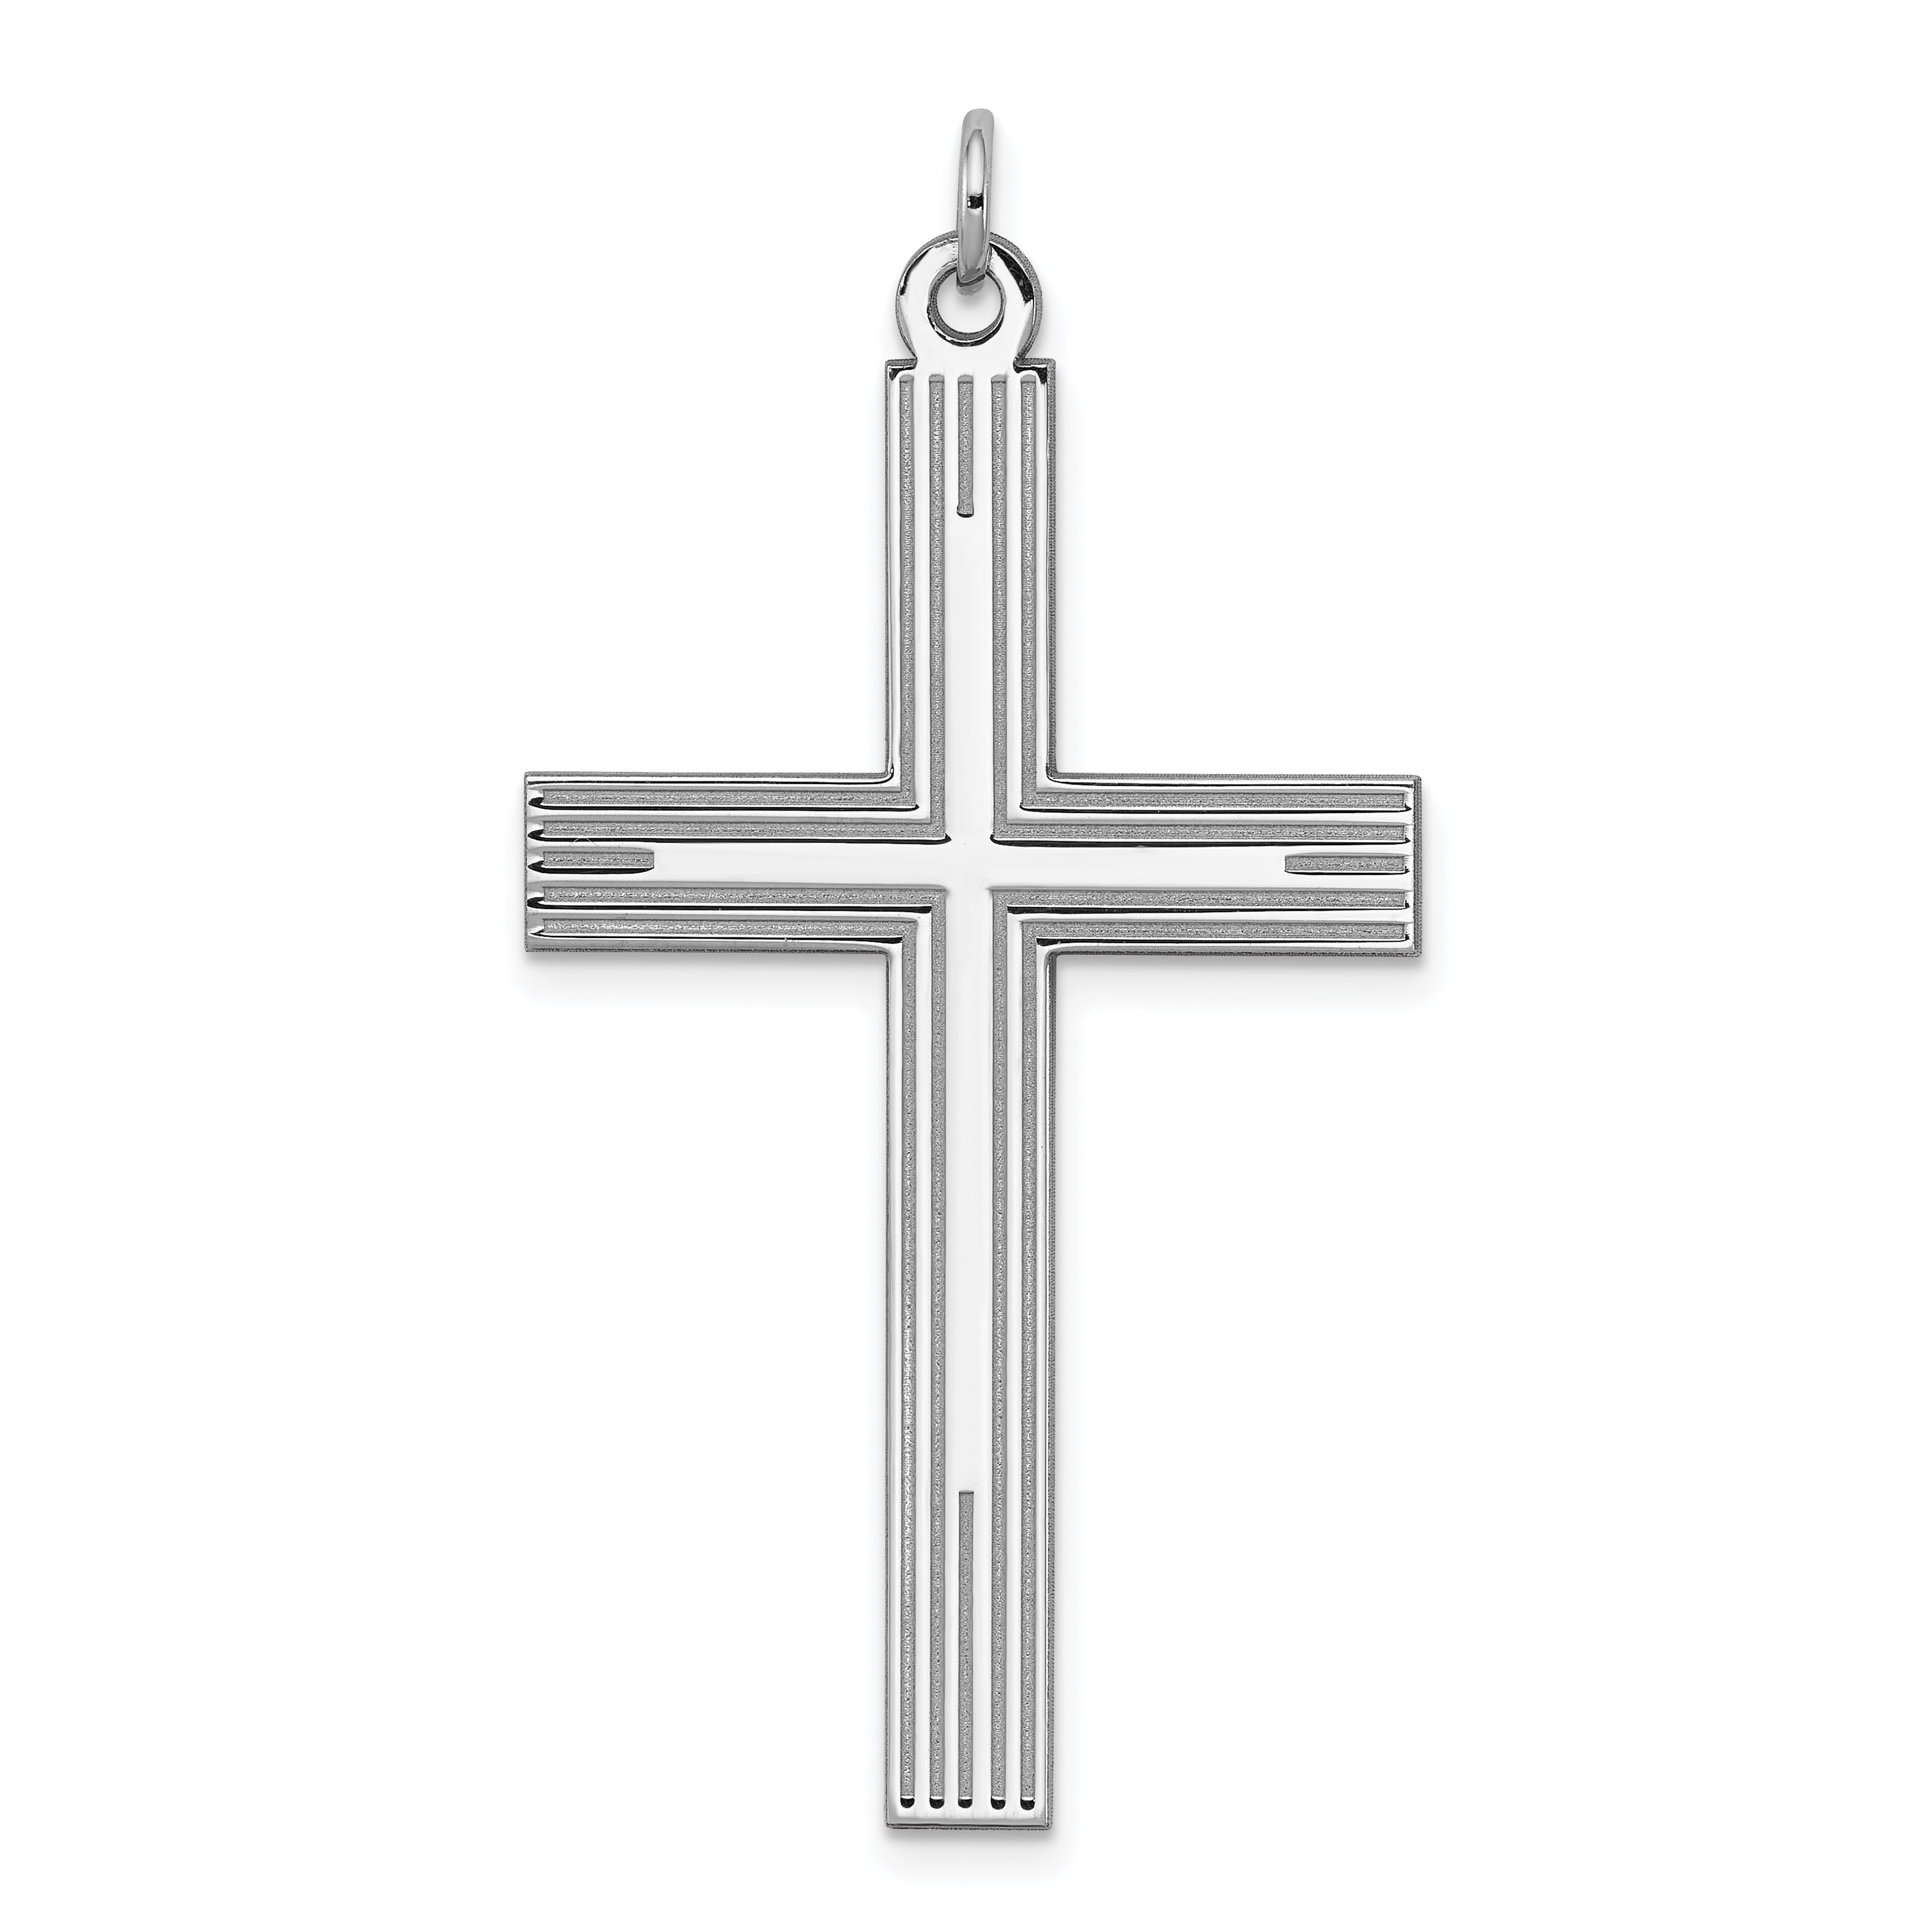 .925 Sterling Silver Laser Designed Latin Cross Charm Pendant